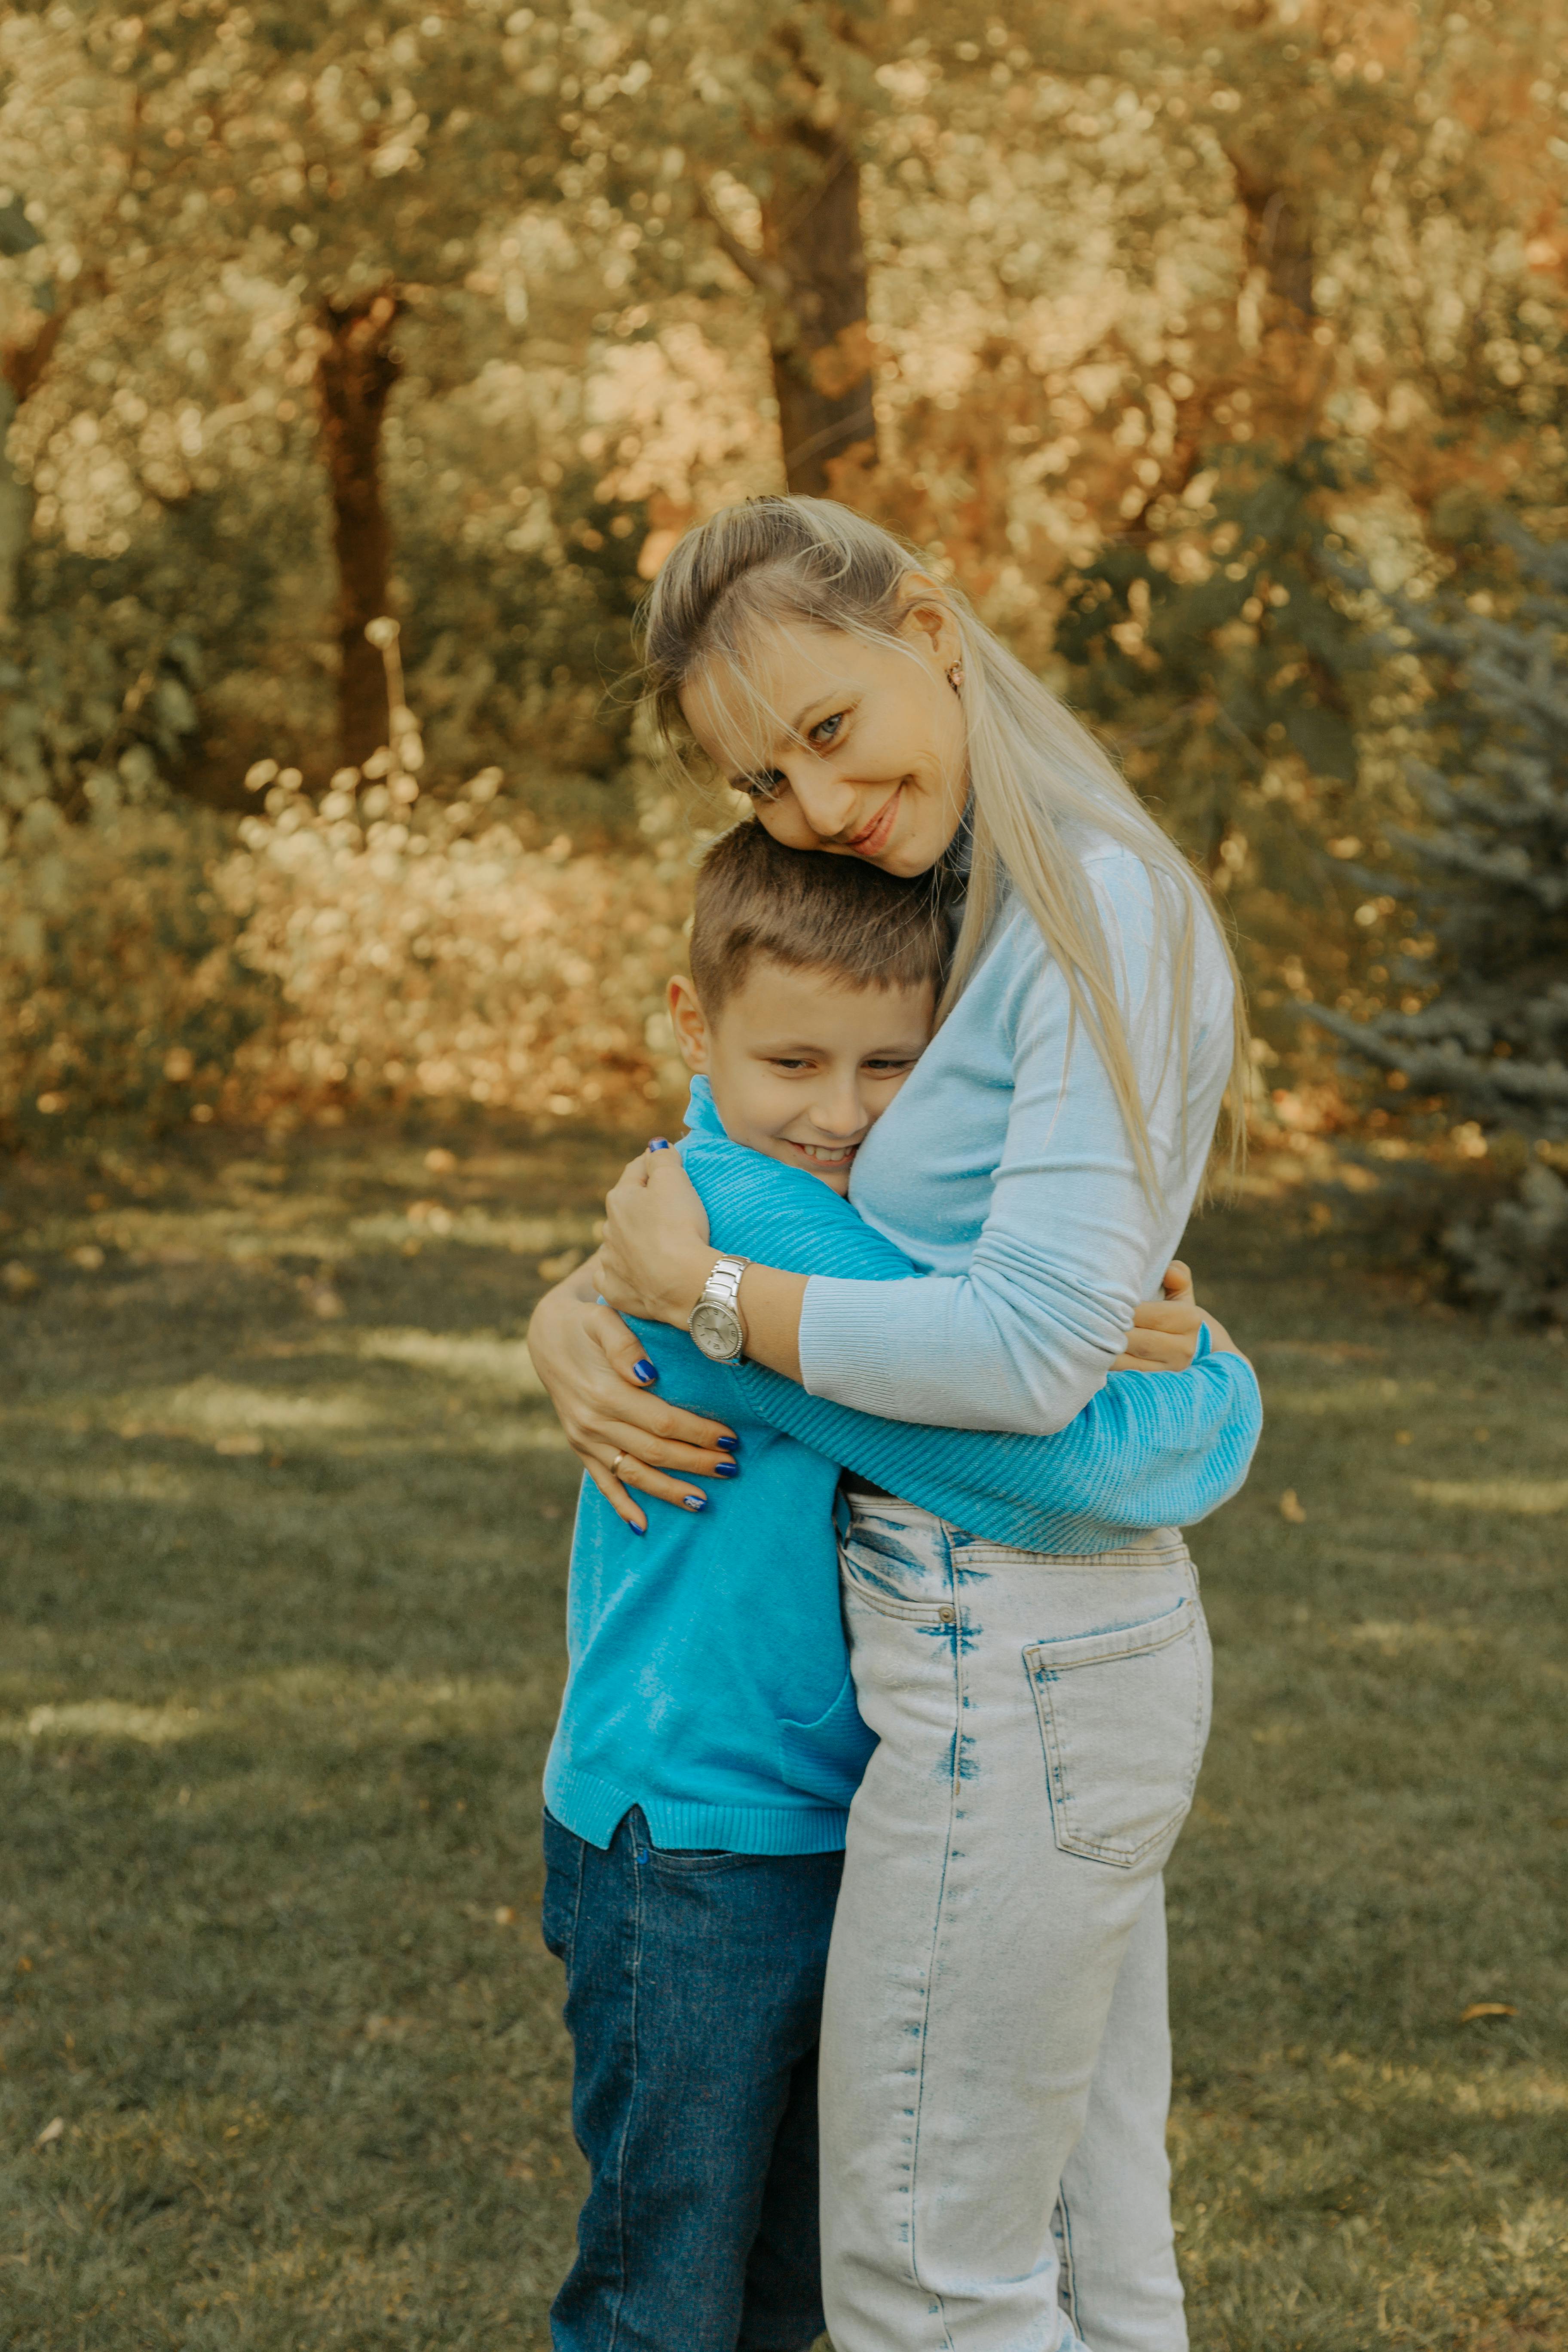 A mom hugging her son | Source: Pexels